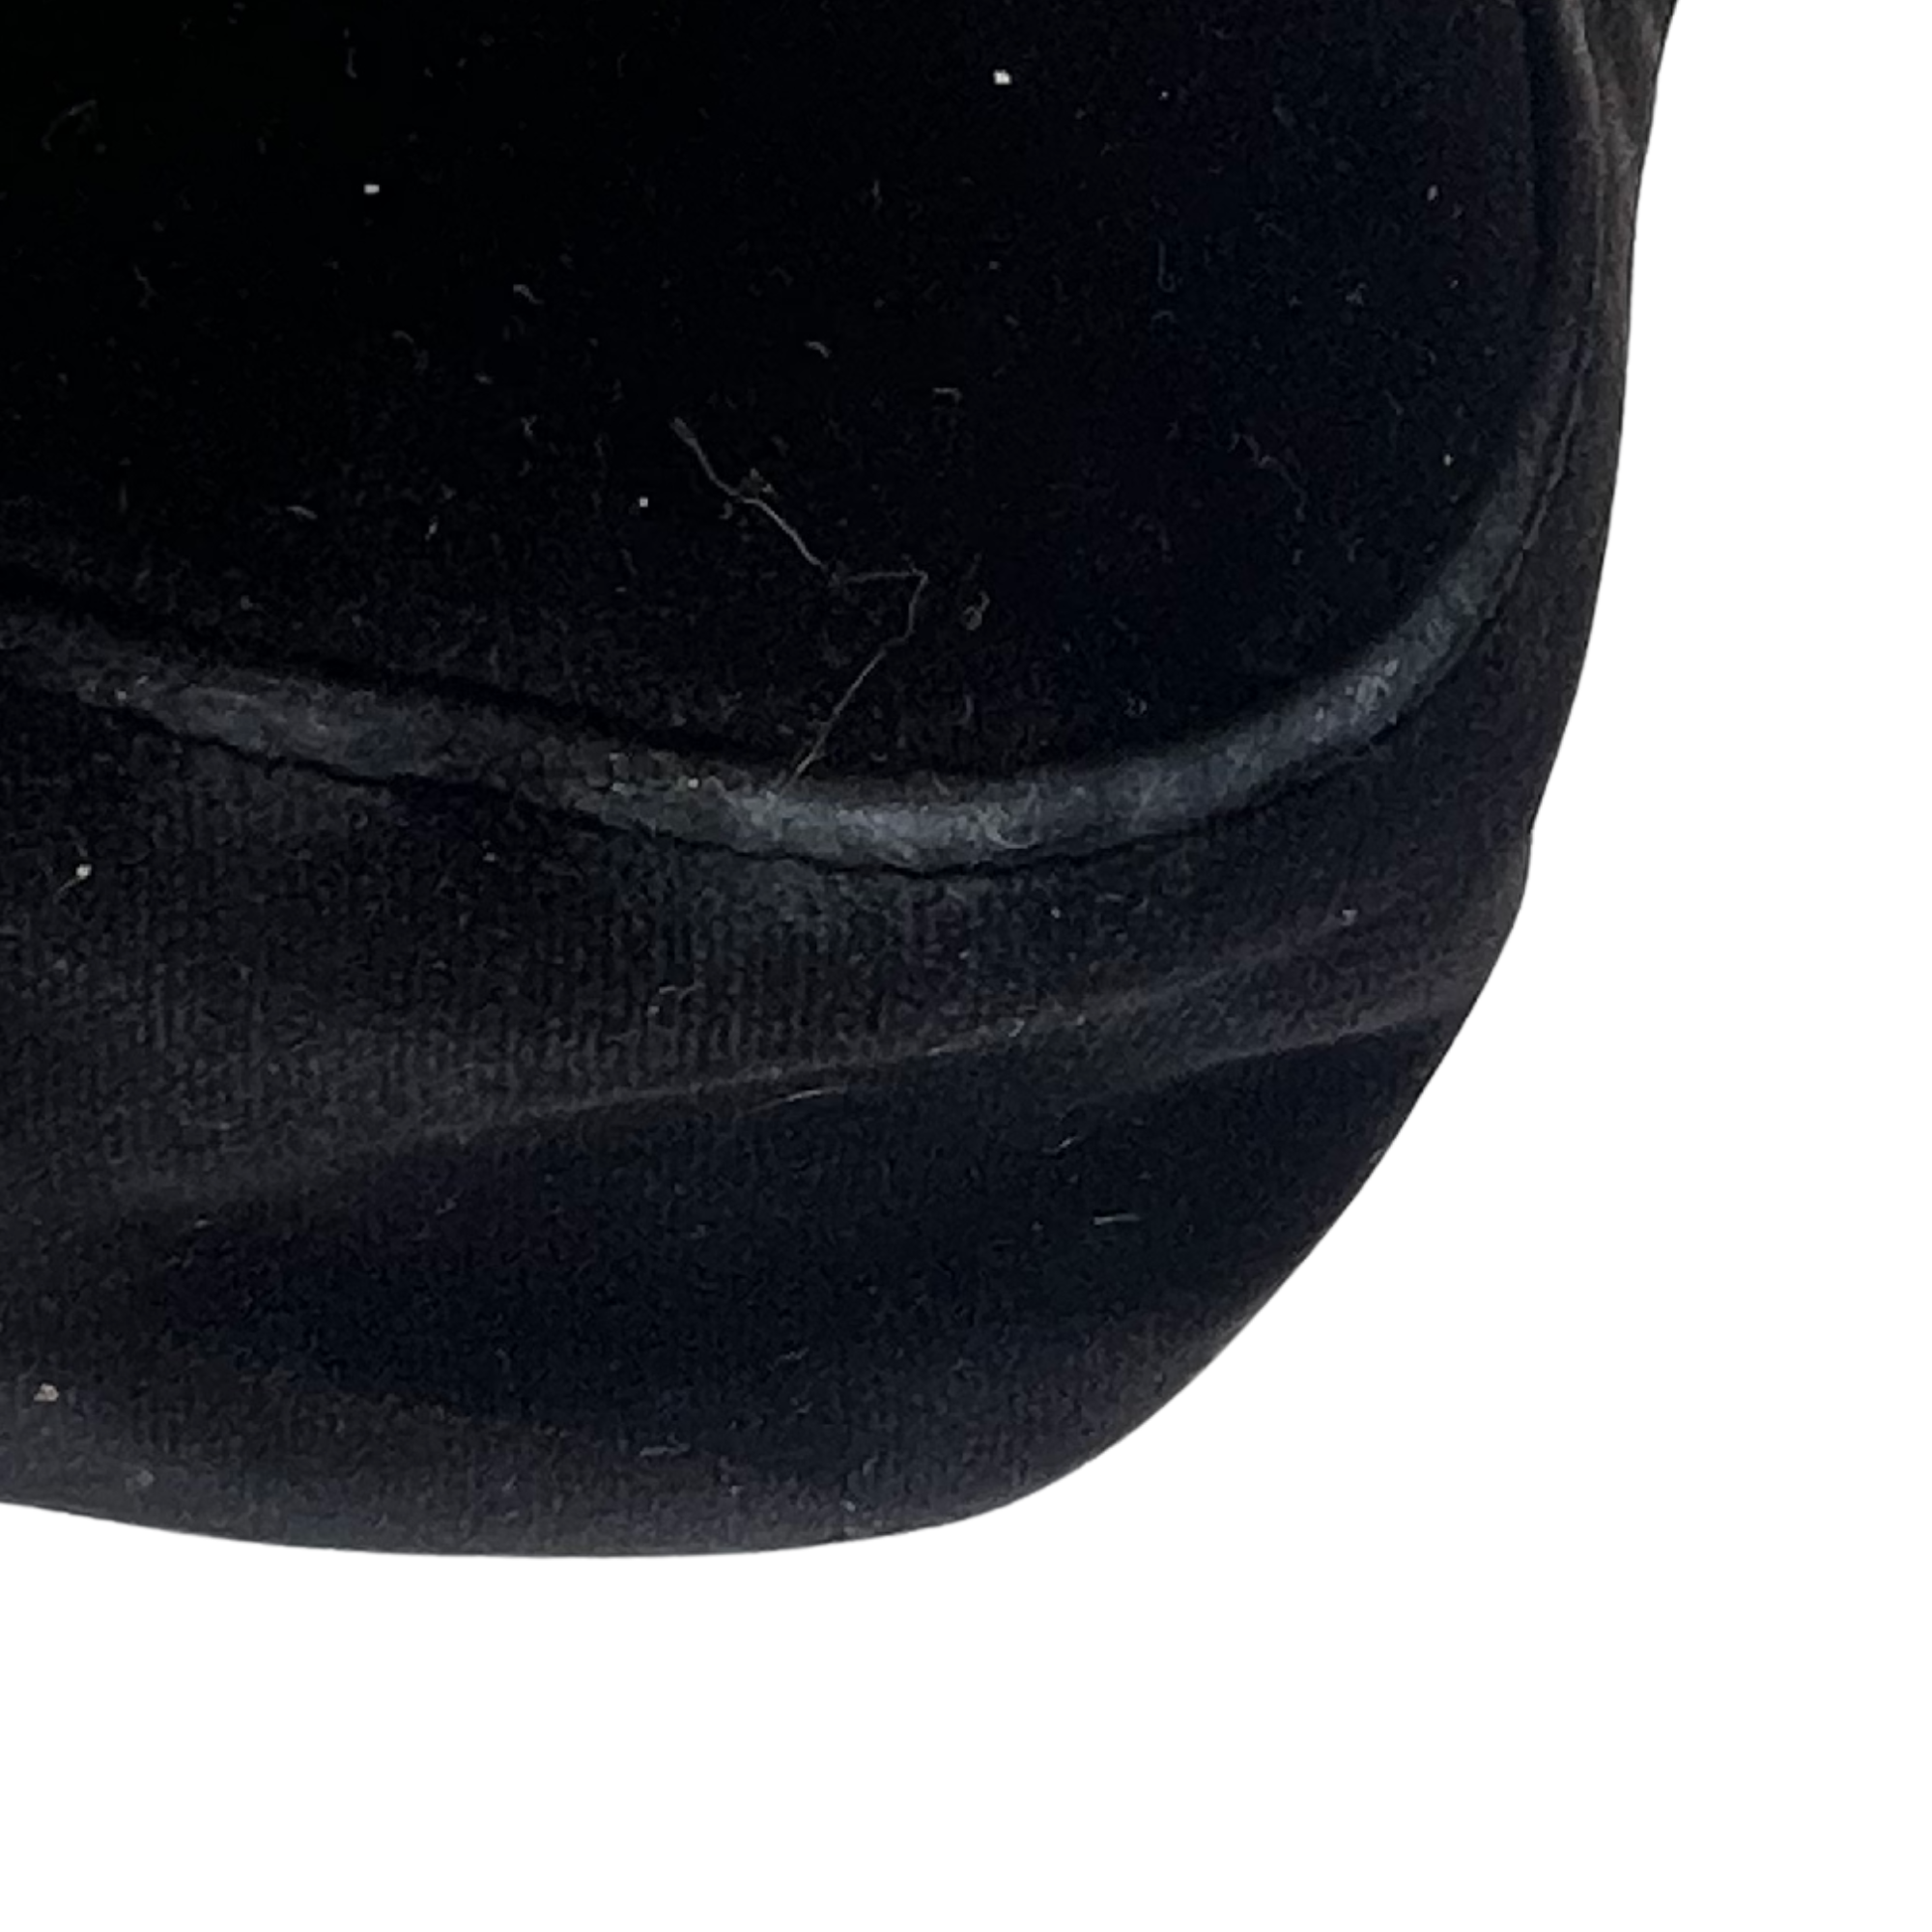 Gucci Marmont Black Velvet Leather Matelasse Shoulder Bag – Queen Bee of  Beverly Hills